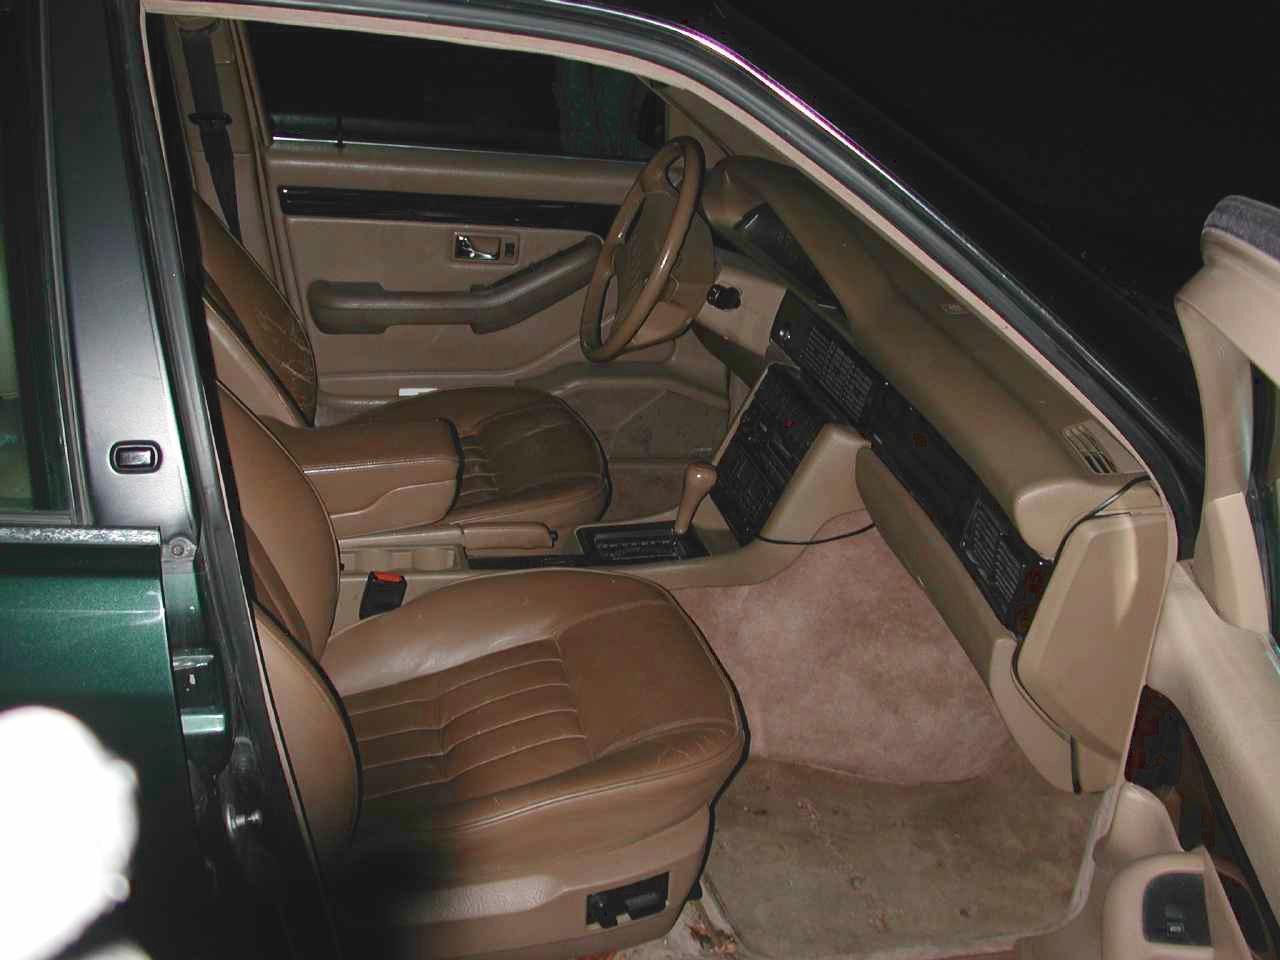 AUDI V8 interior